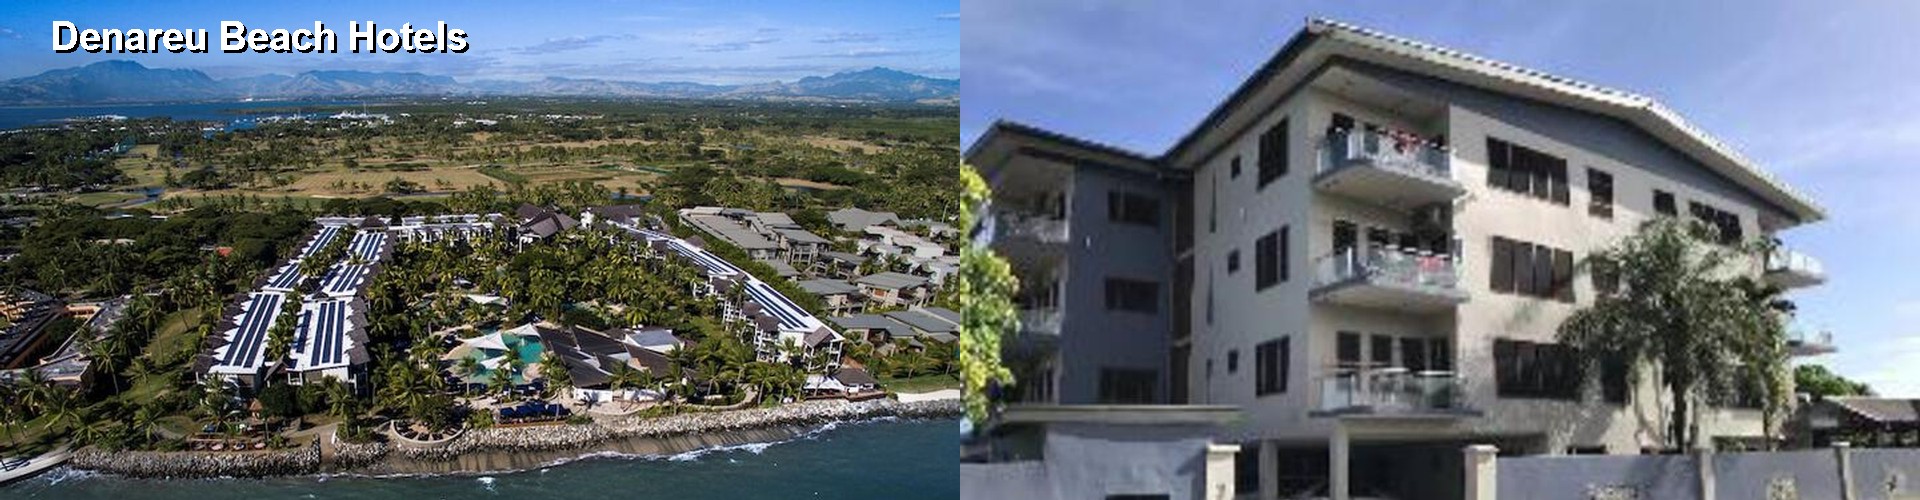 5 Best Hotels near Denareu Beach